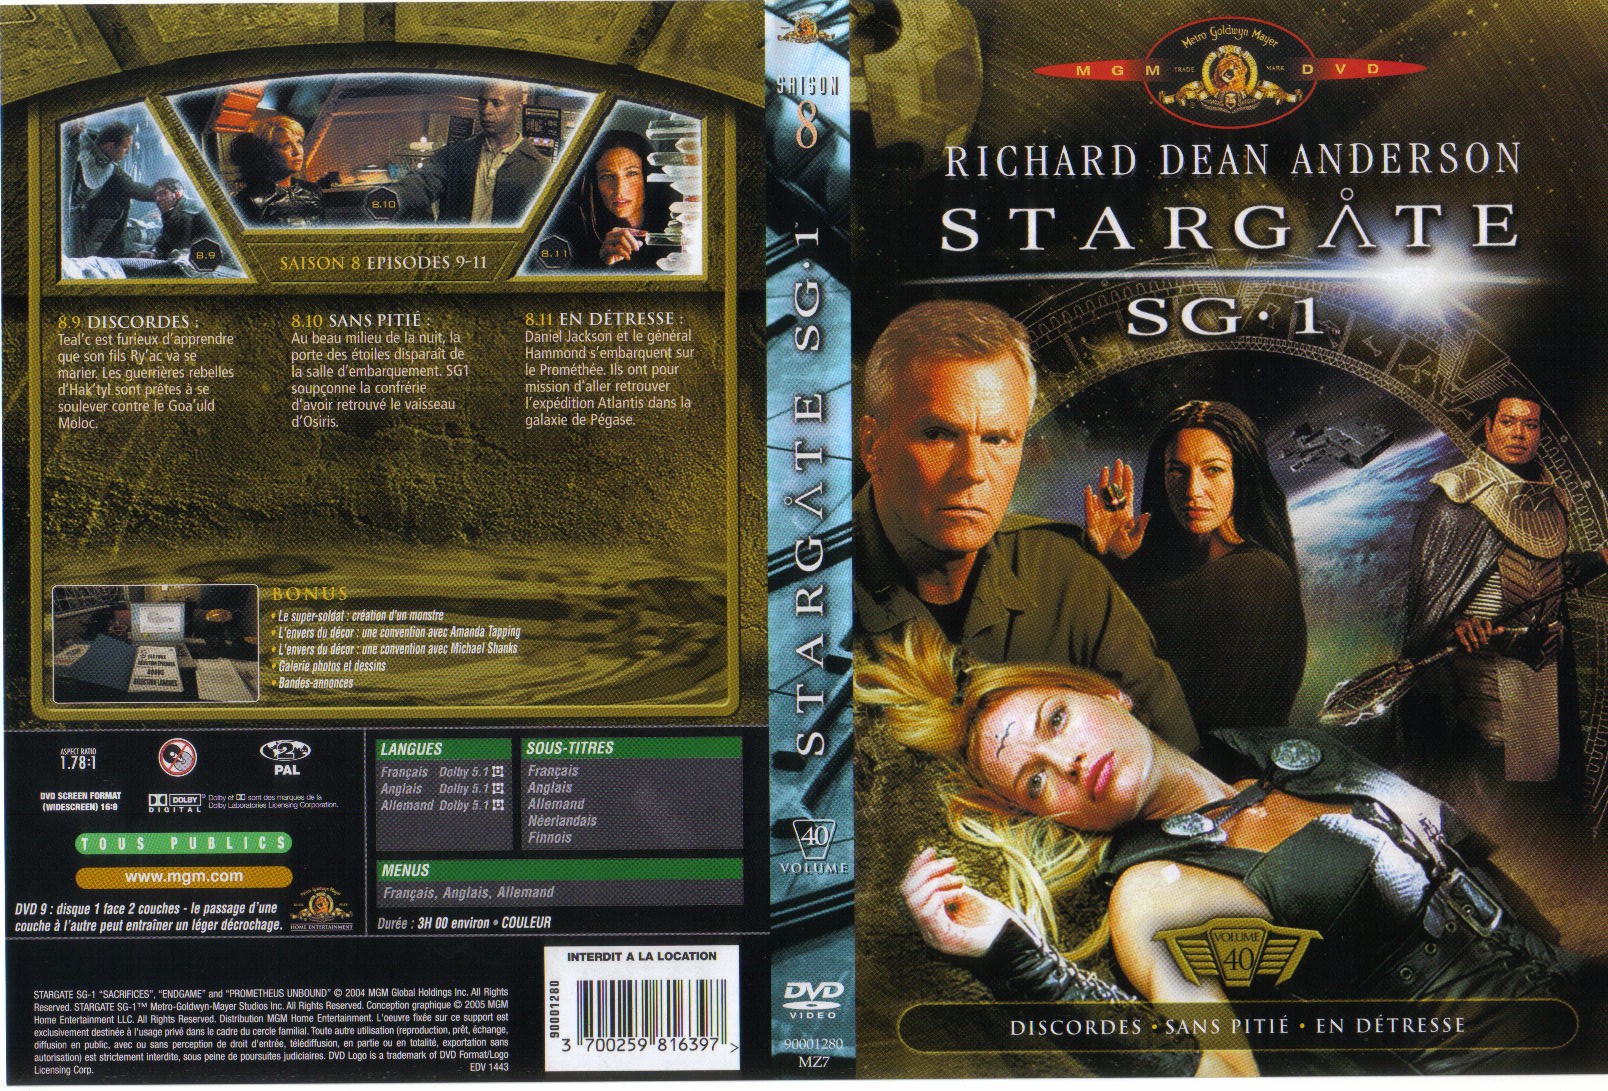 Jaquette DVD Stargate SG1 vol 40